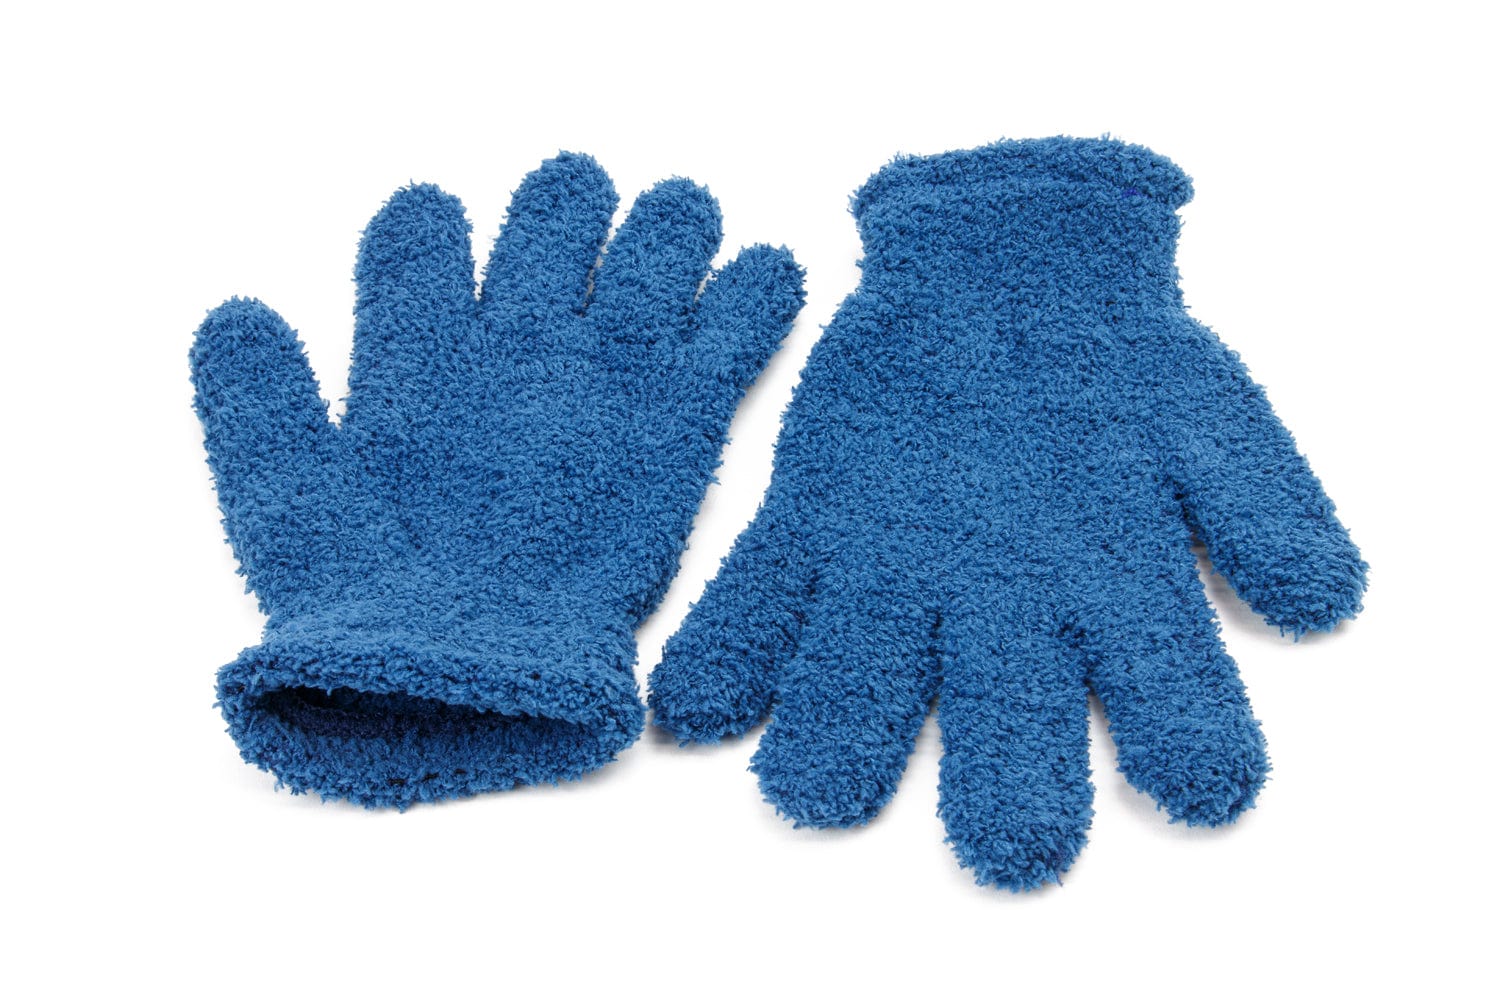 Autofiber [Knit Mitt] Microfiber Car Detailing Gloves - 2 Pack Gray